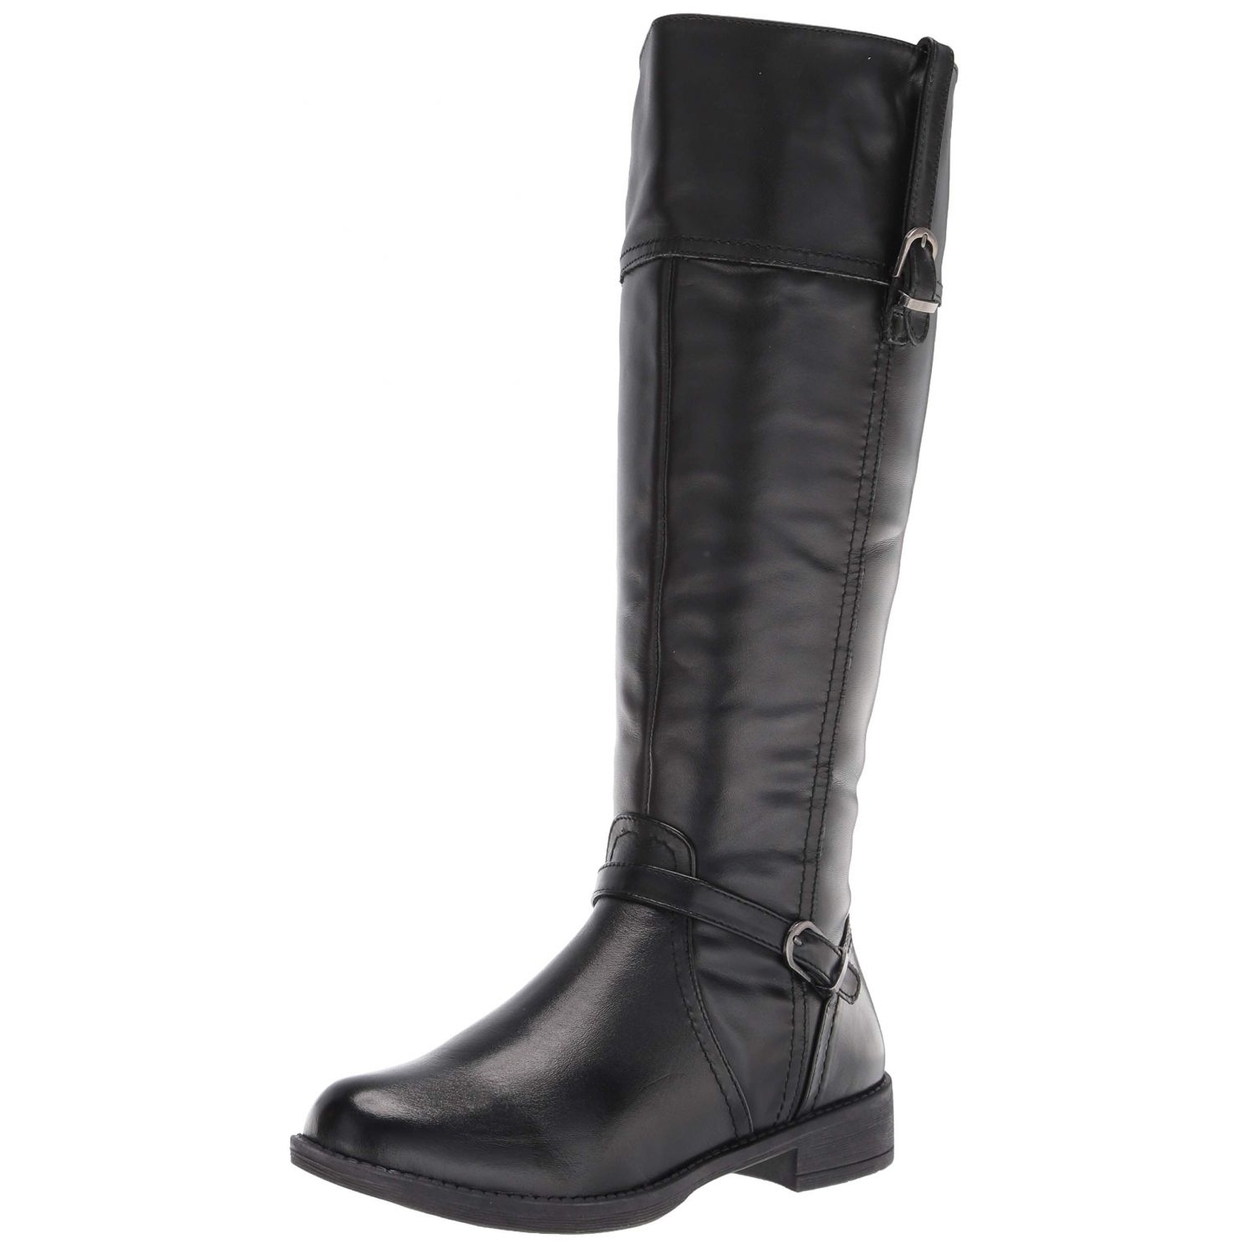 Propet Womens Tasha Zippered Casual Boots Knee High Low Heel 1-2 - Black BROWN - BROWN, 9.5 Wide